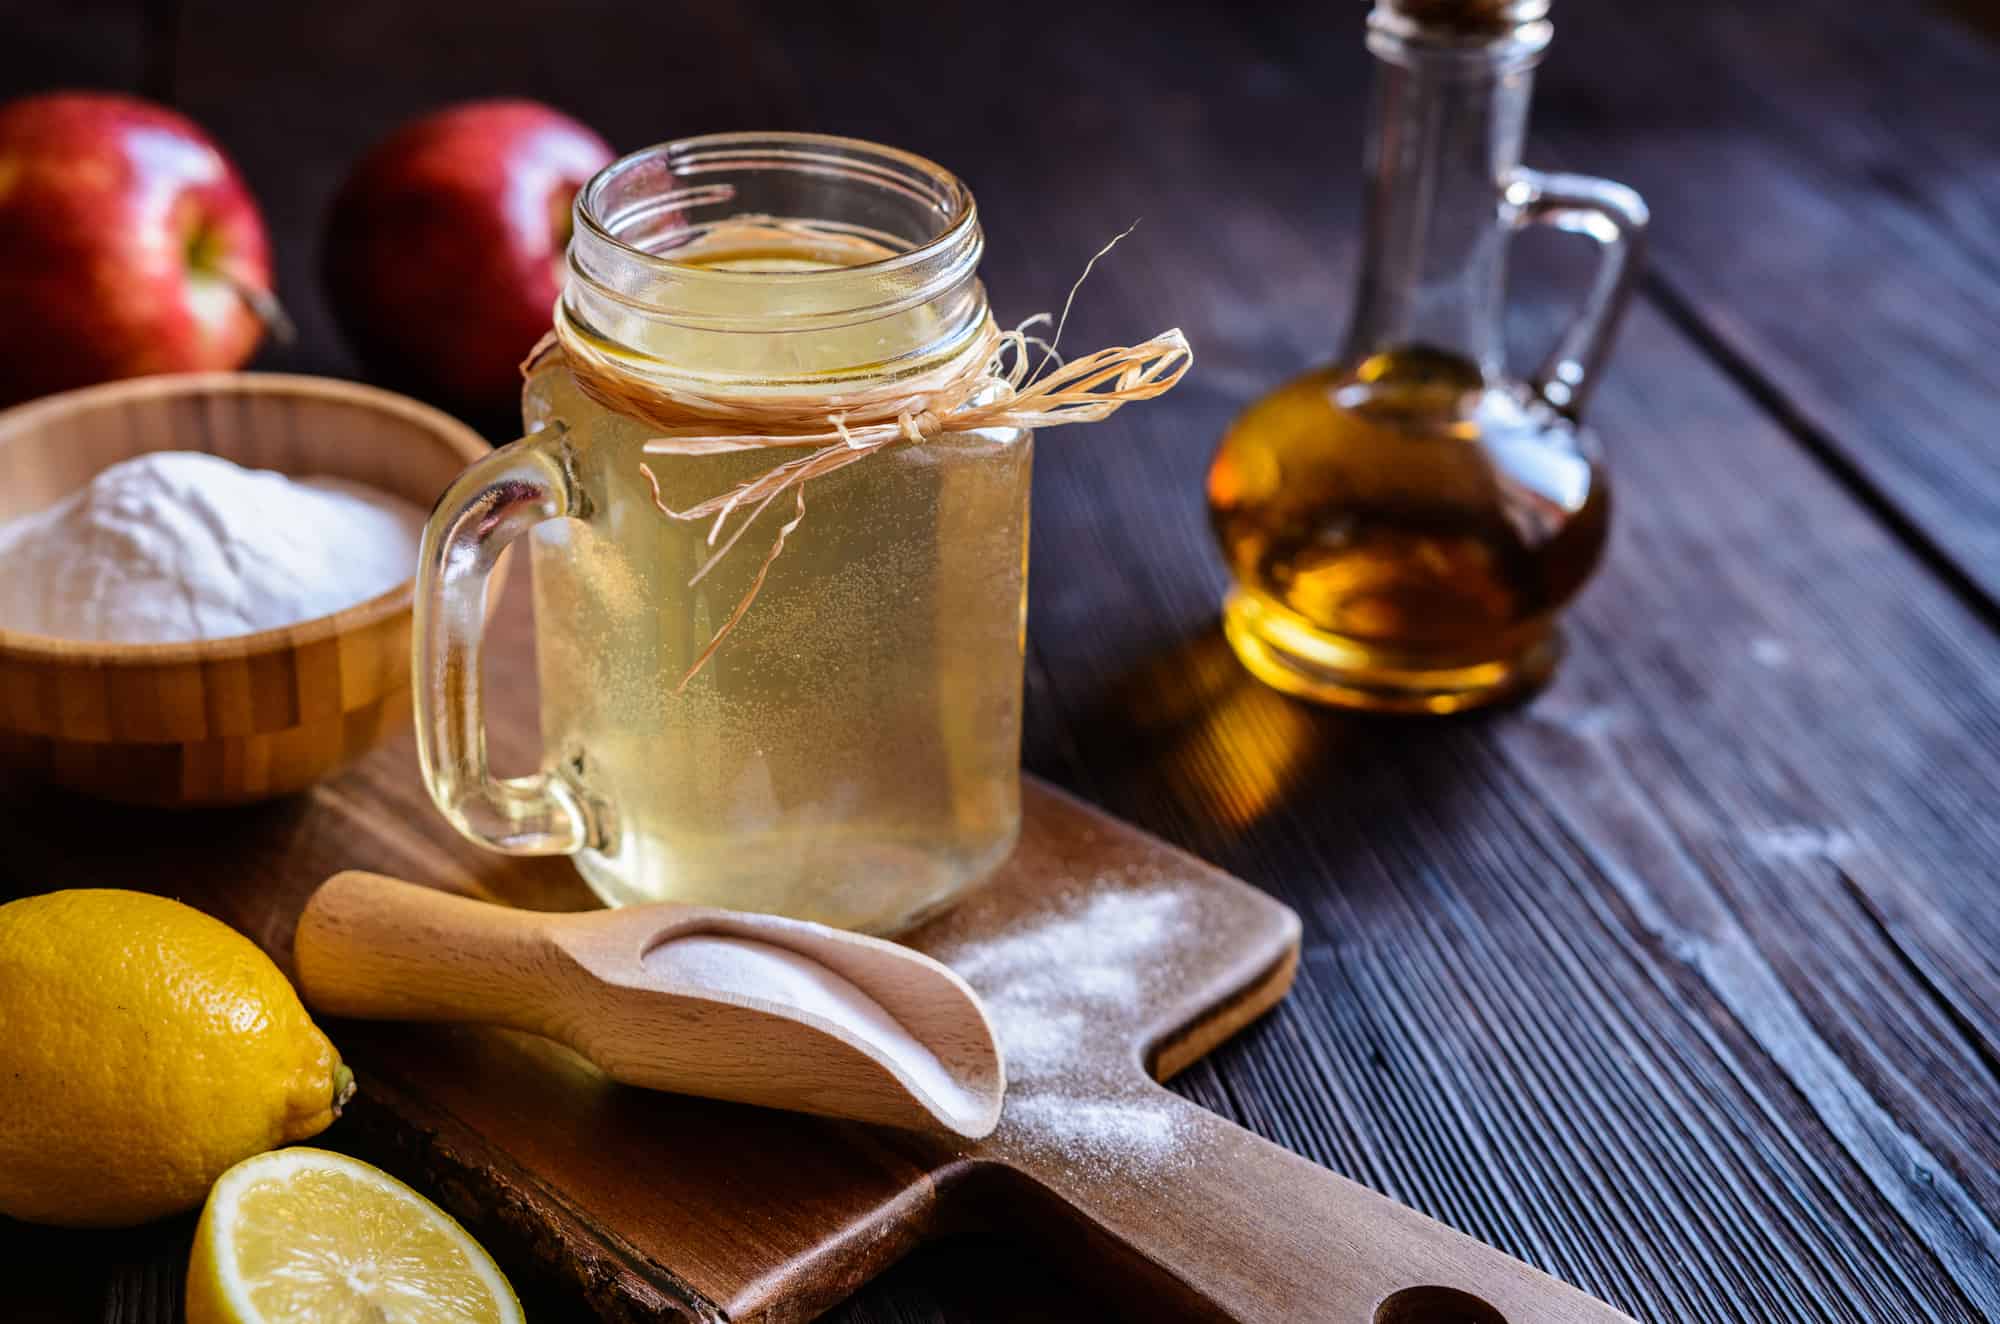 Detox drink made of water, apple cider vinegar, lemon juice and baking soda